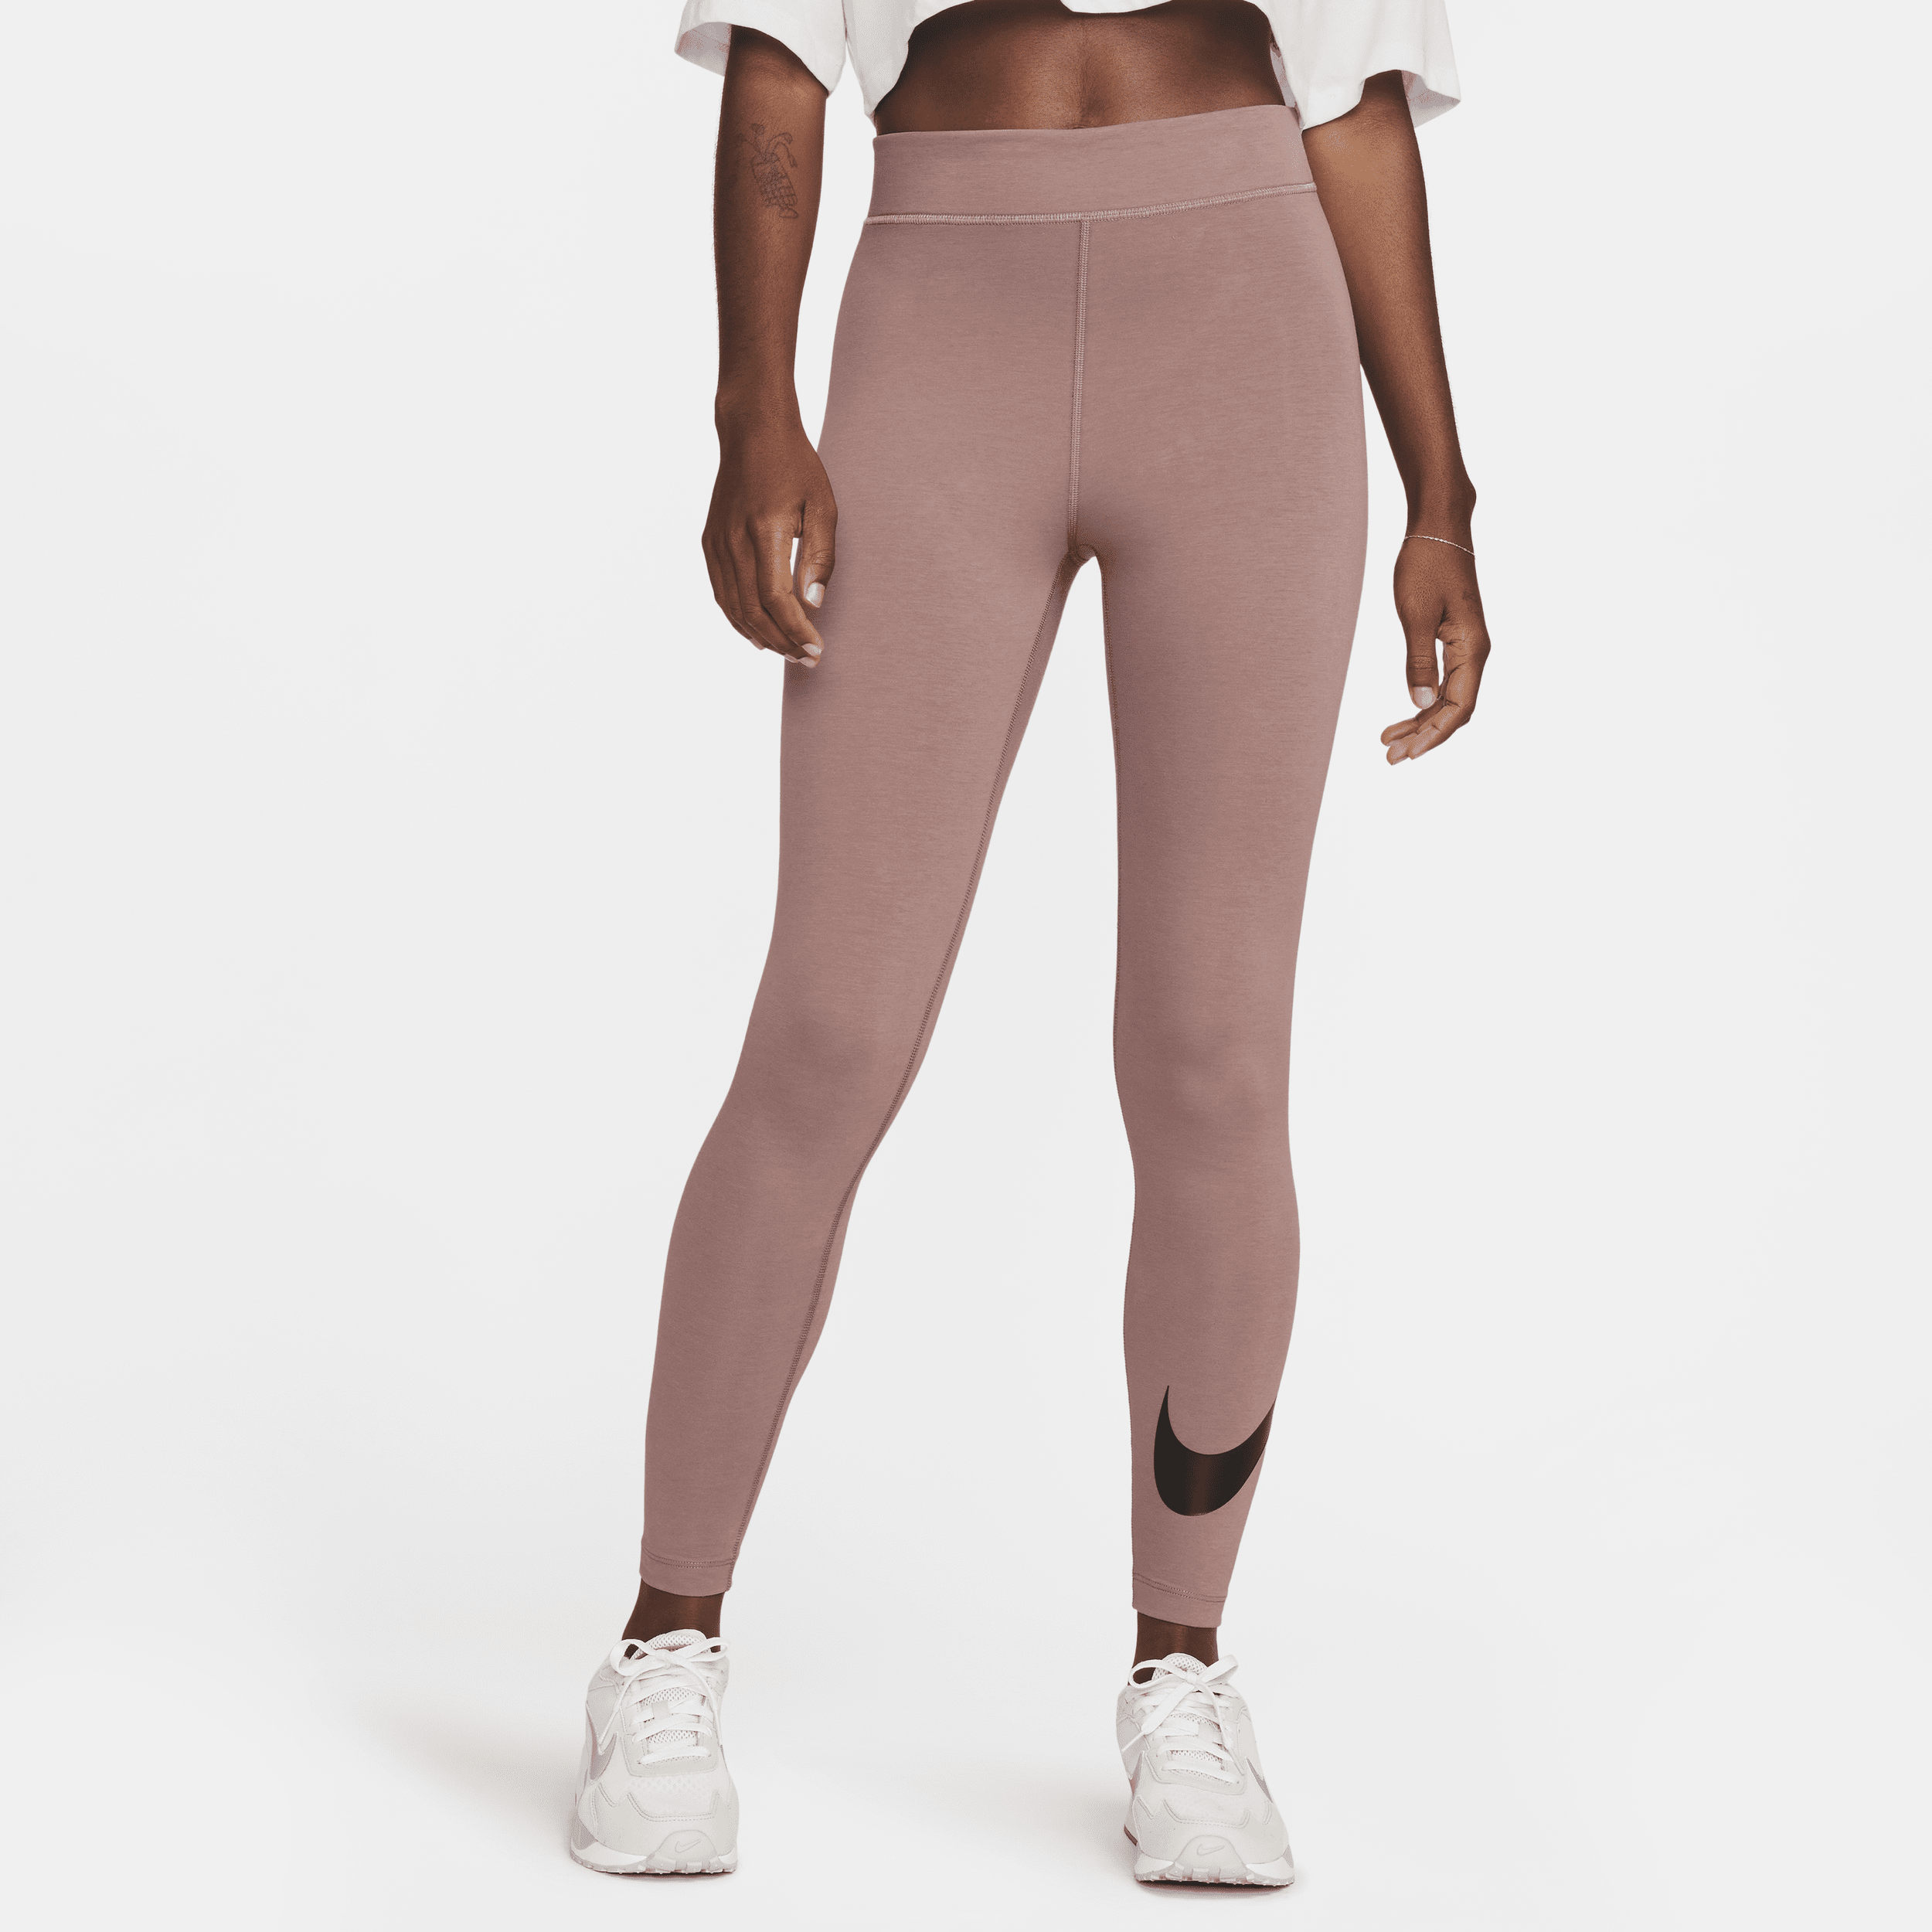 Nike Women's  Sportswear Classics High-waisted Graphic Leggings In Purple